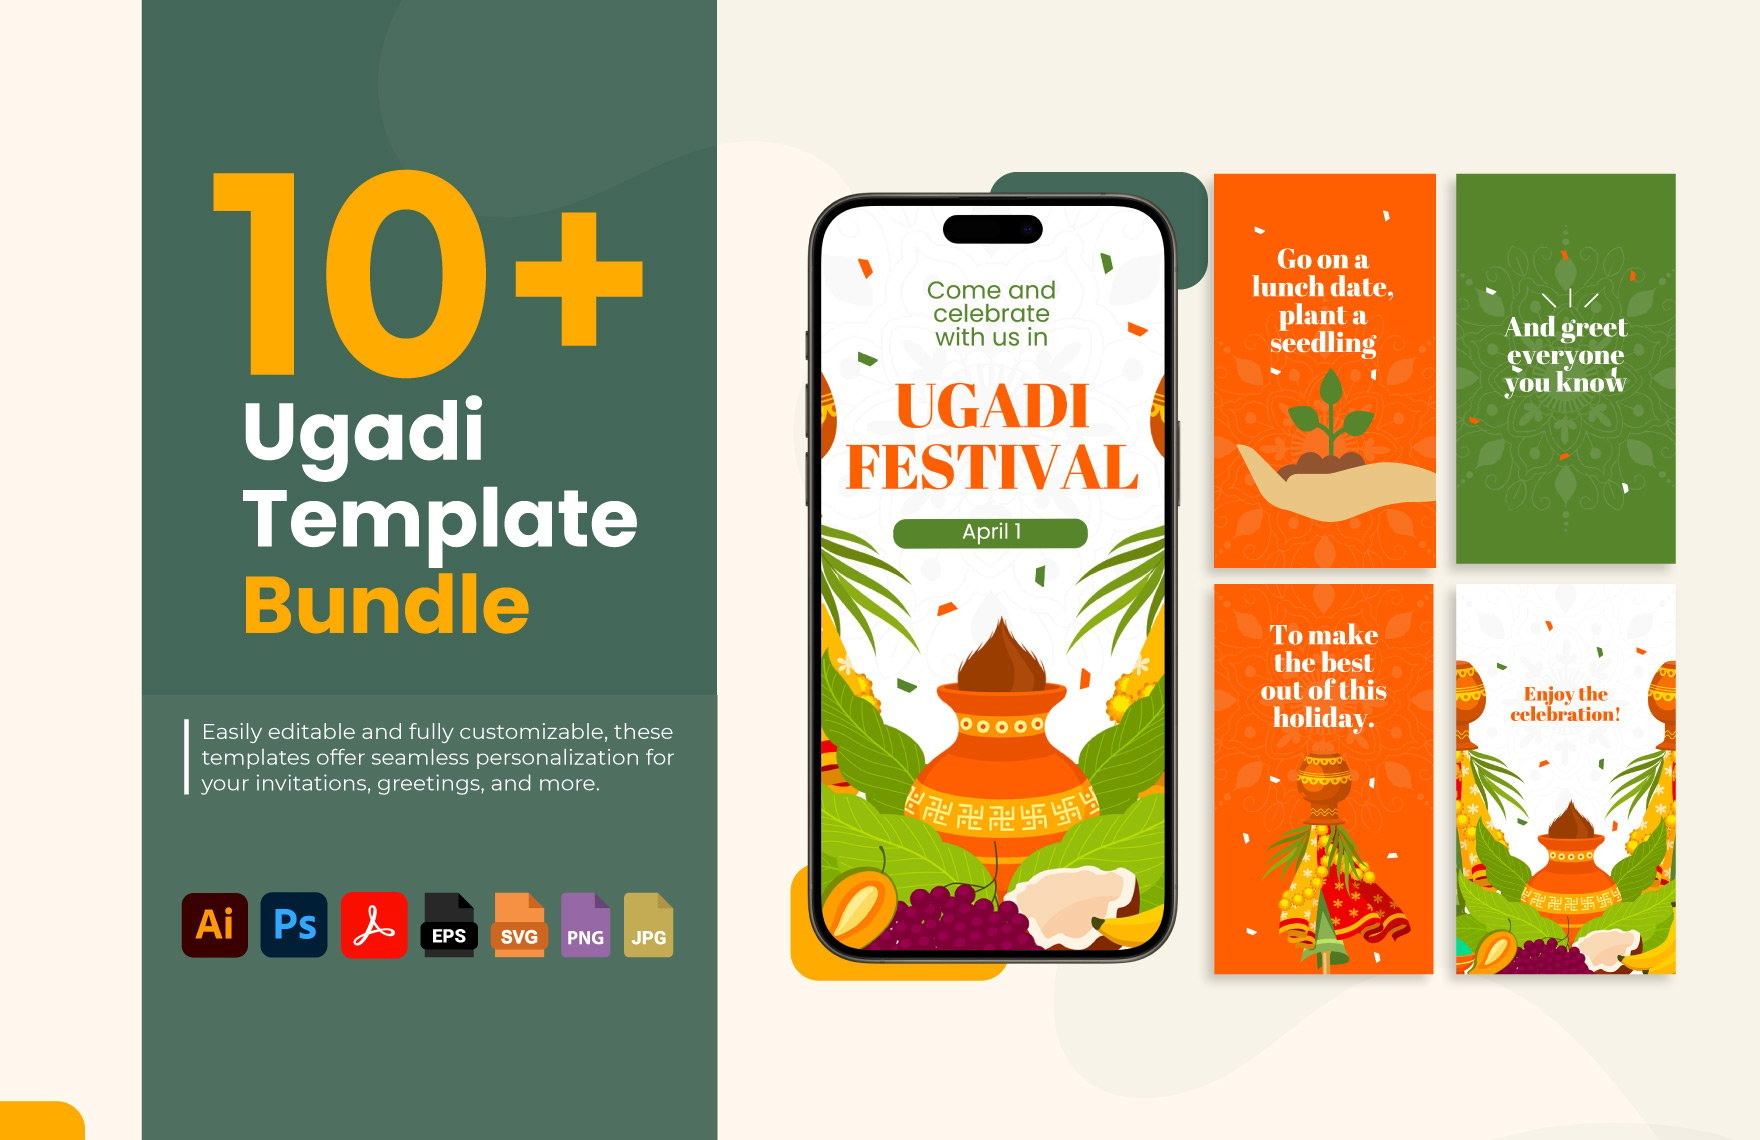 Free 10+ Ugadi Template Bundle in PDF, Illustrator, PSD, EPS, SVG, JPG, PNG